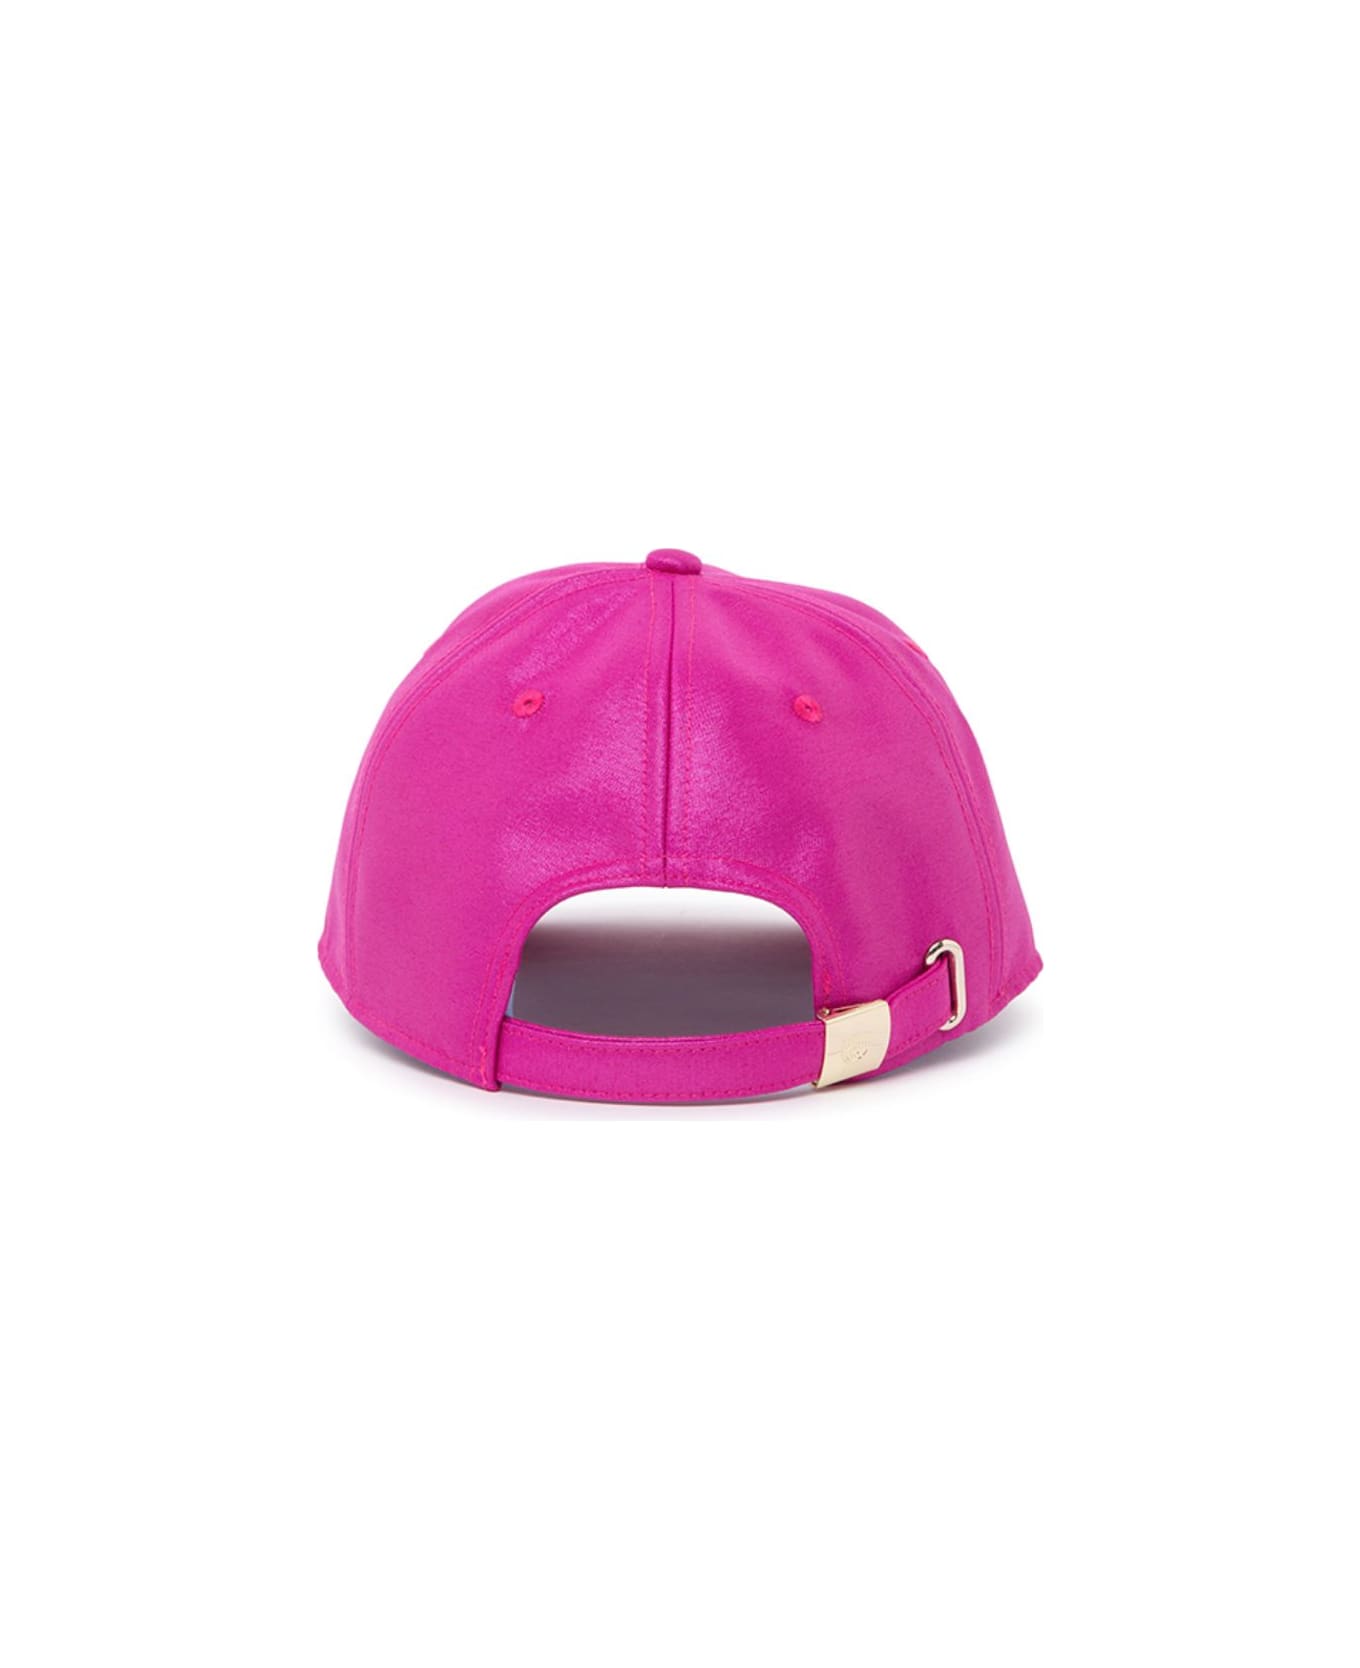 Chiara Ferragni Women's Hat - Pink 帽子